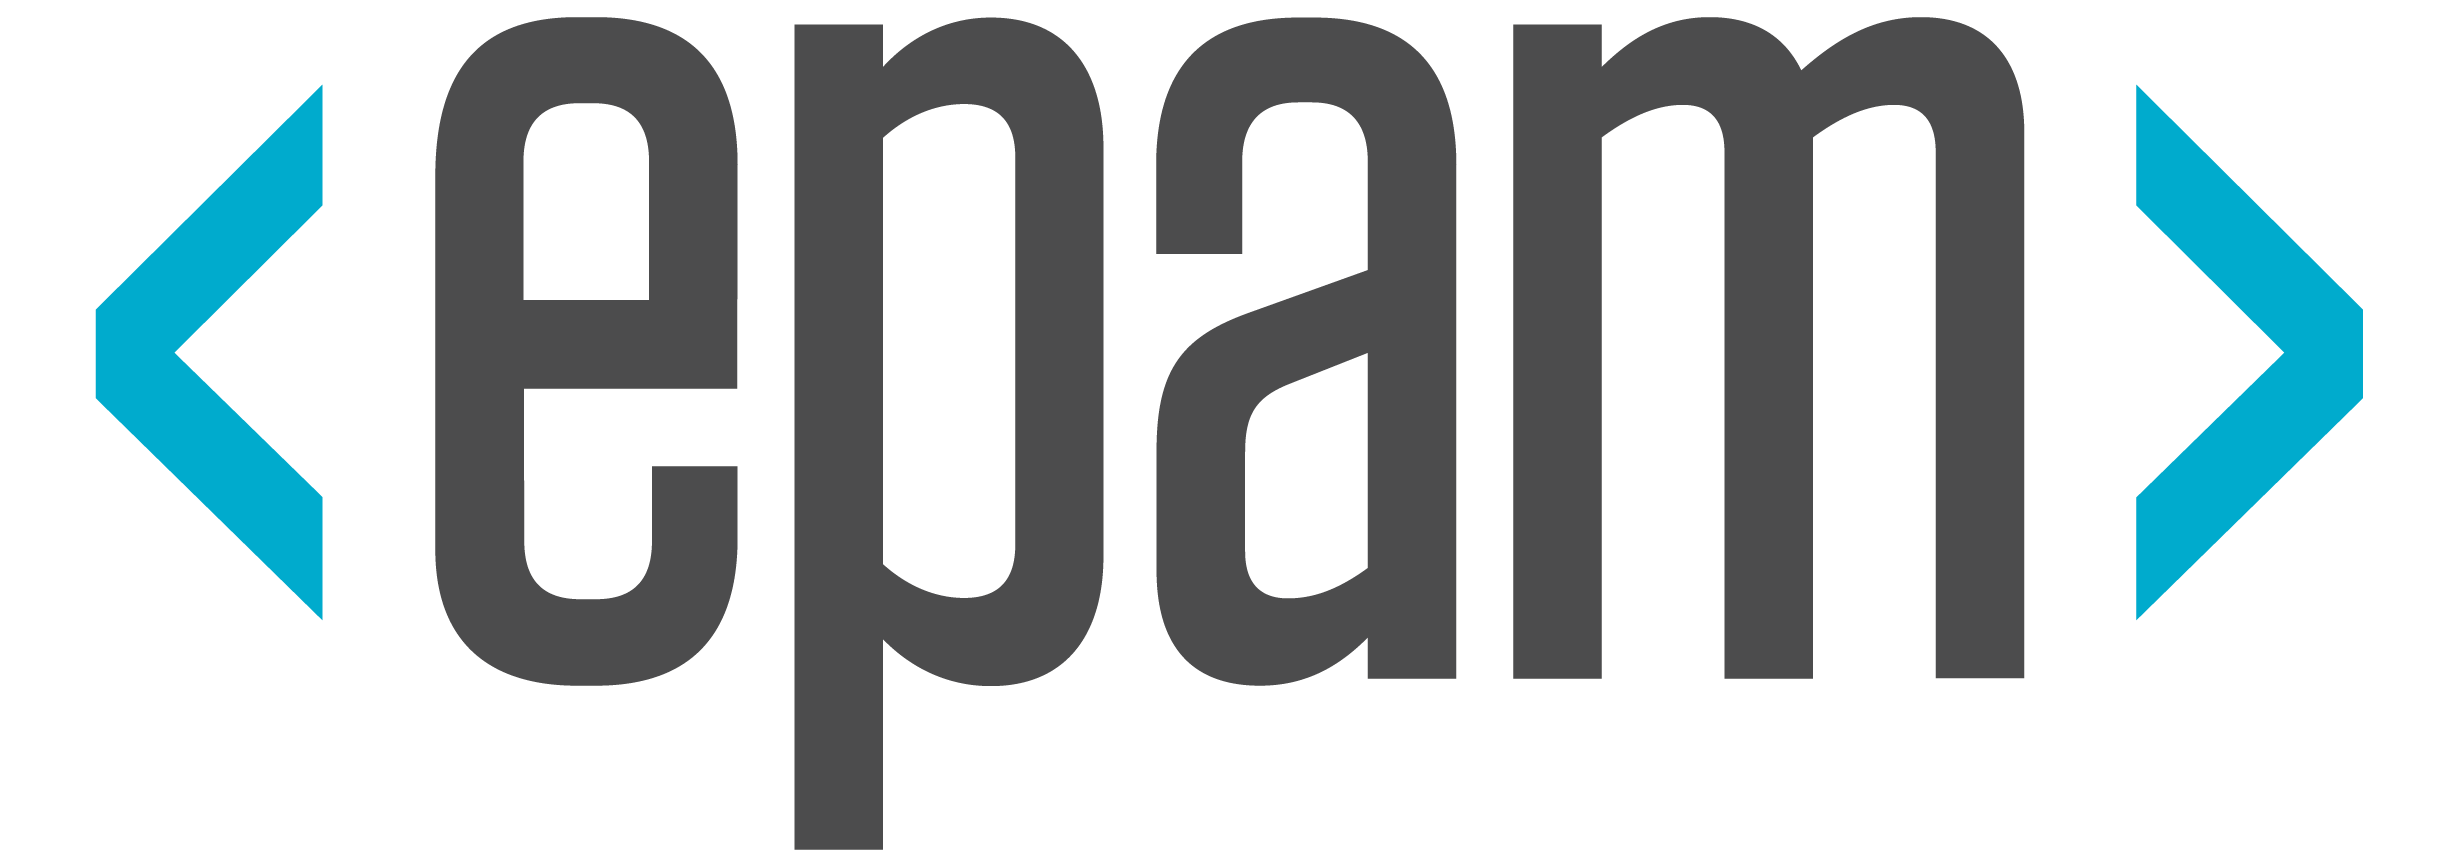 Epam Systems Inc